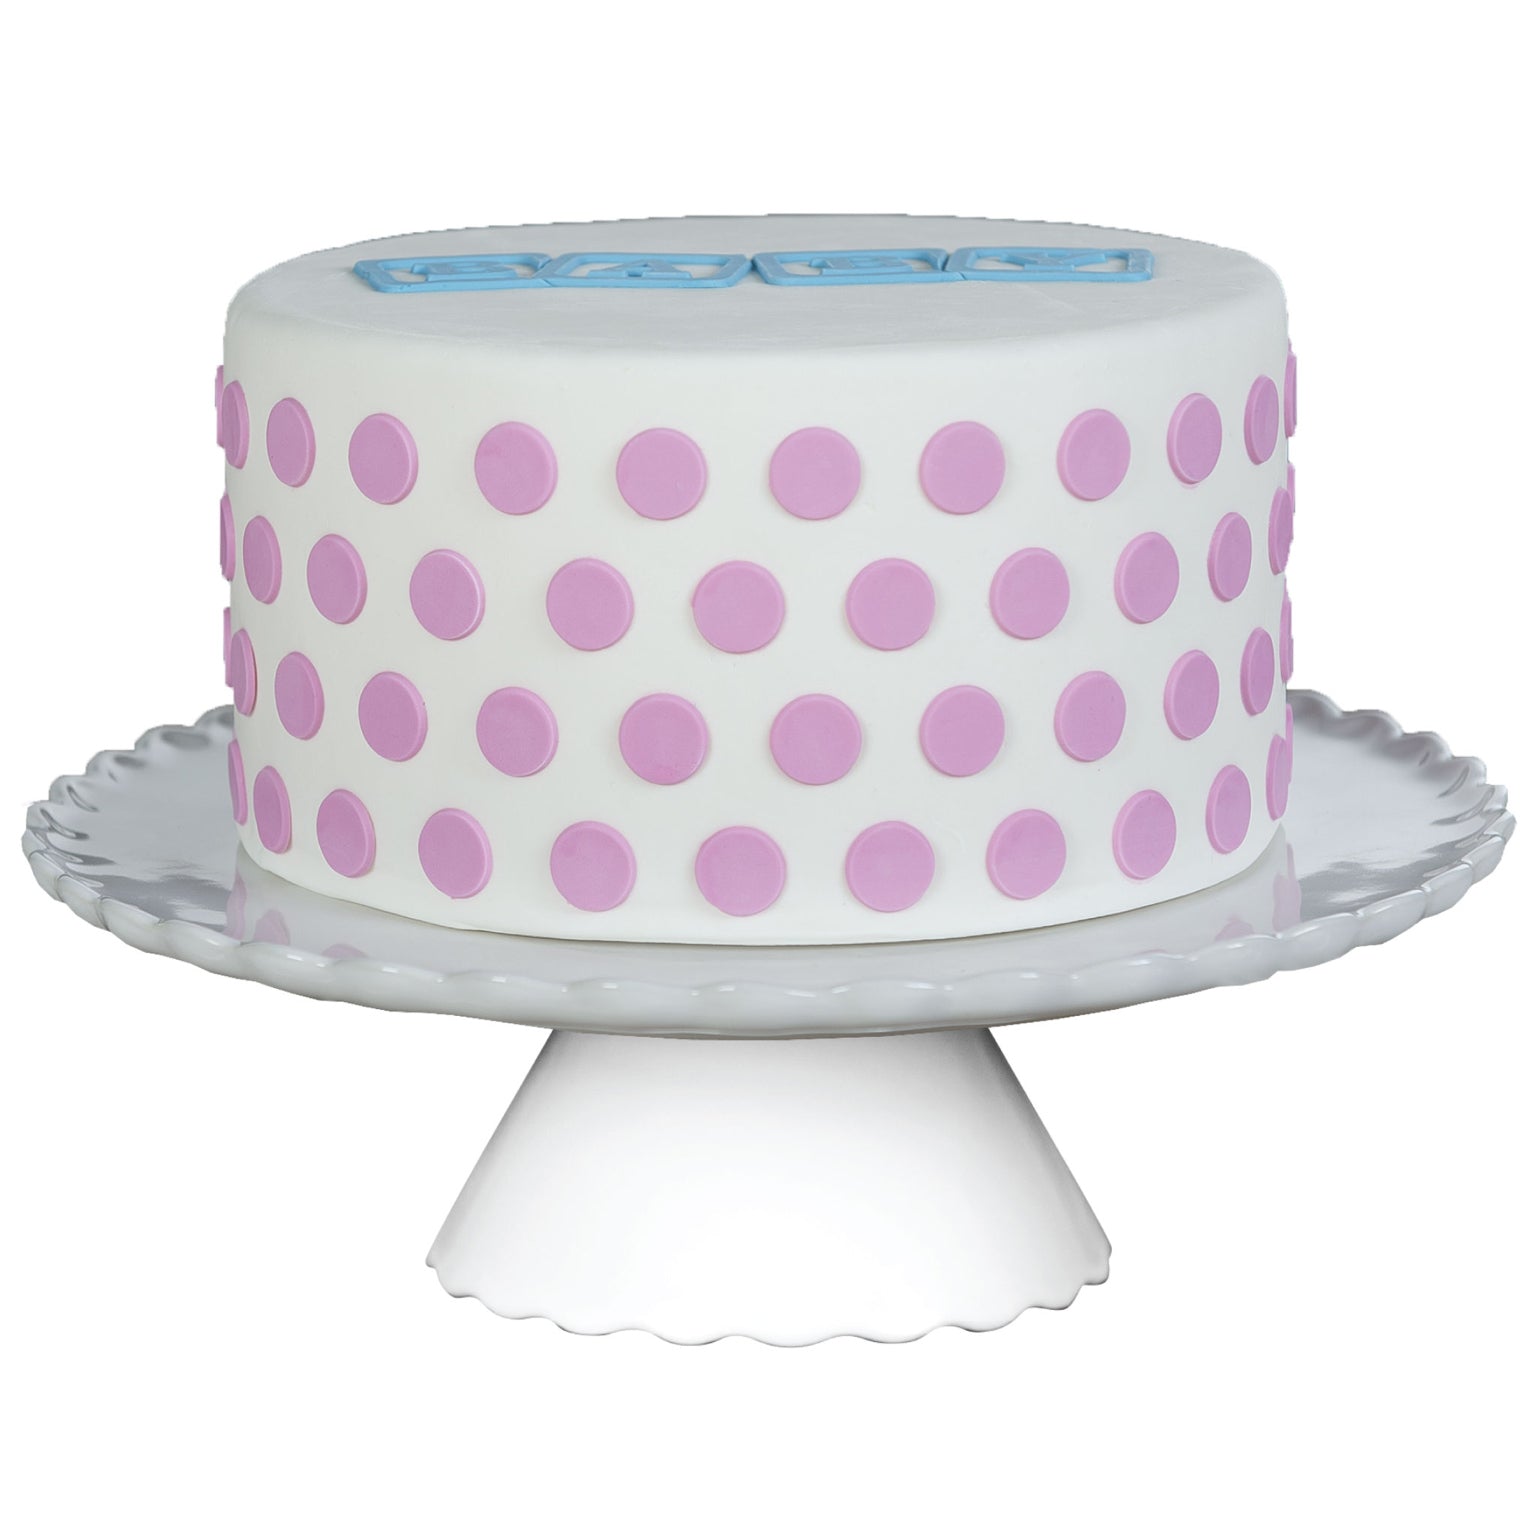 59 Cheerful And Playful Polka Dot Wedding Cakes - Weddingomania